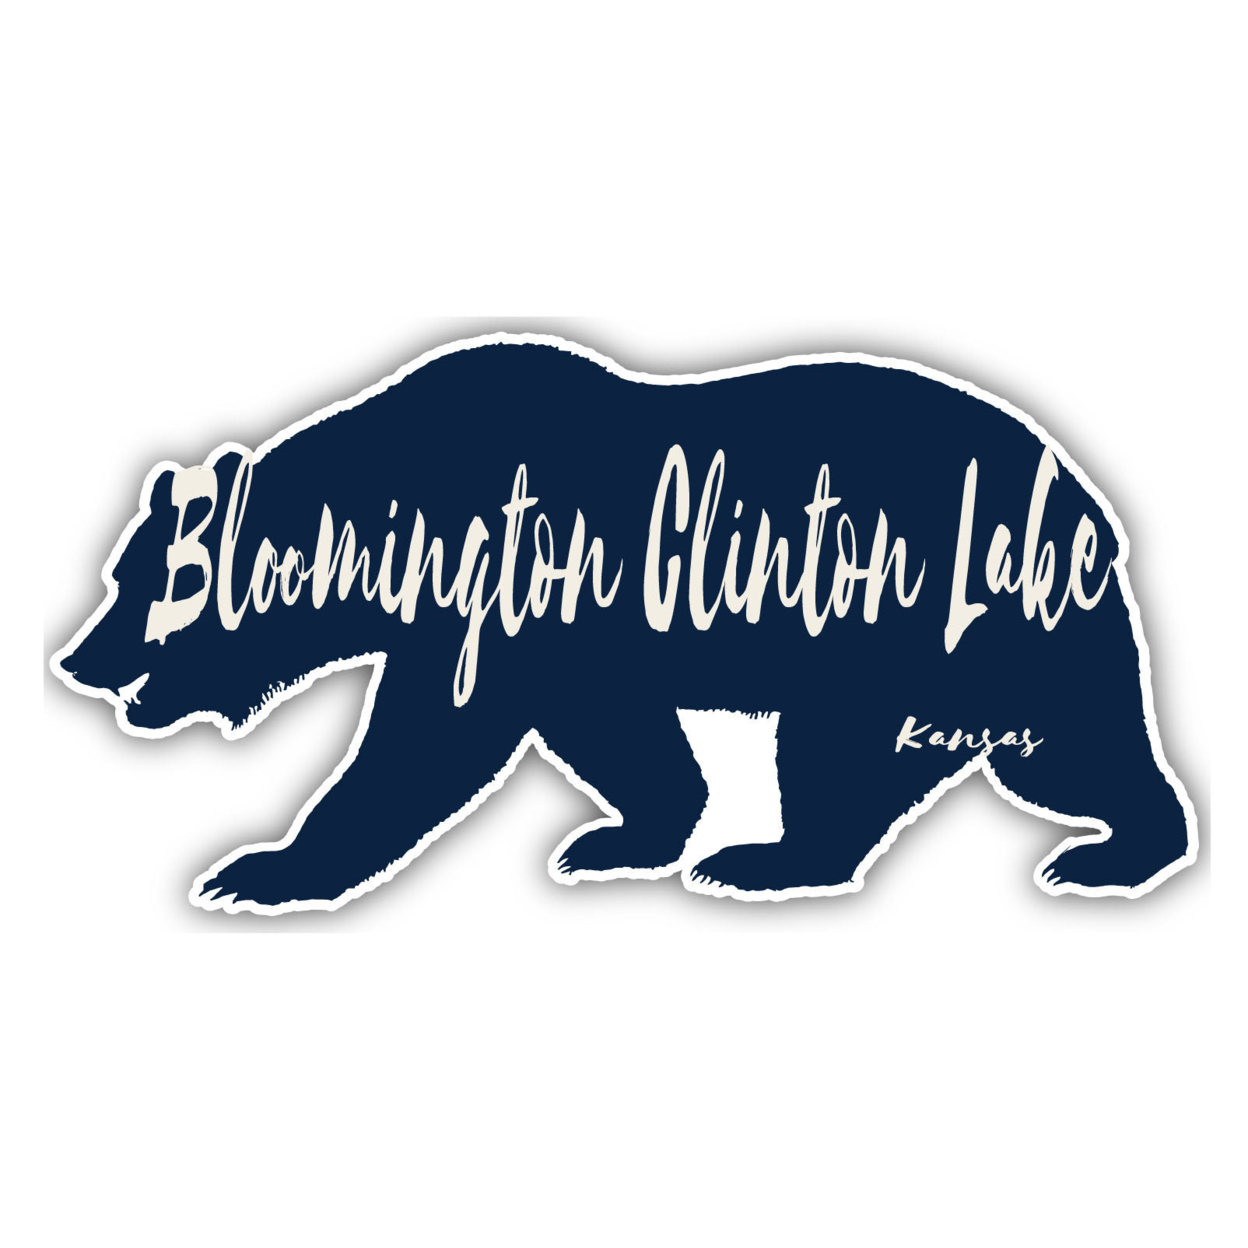 Bloomington Clinton Lake Kansas Souvenir Decorative Stickers (Choose Theme And Size) - Single Unit, 6-Inch, Bear